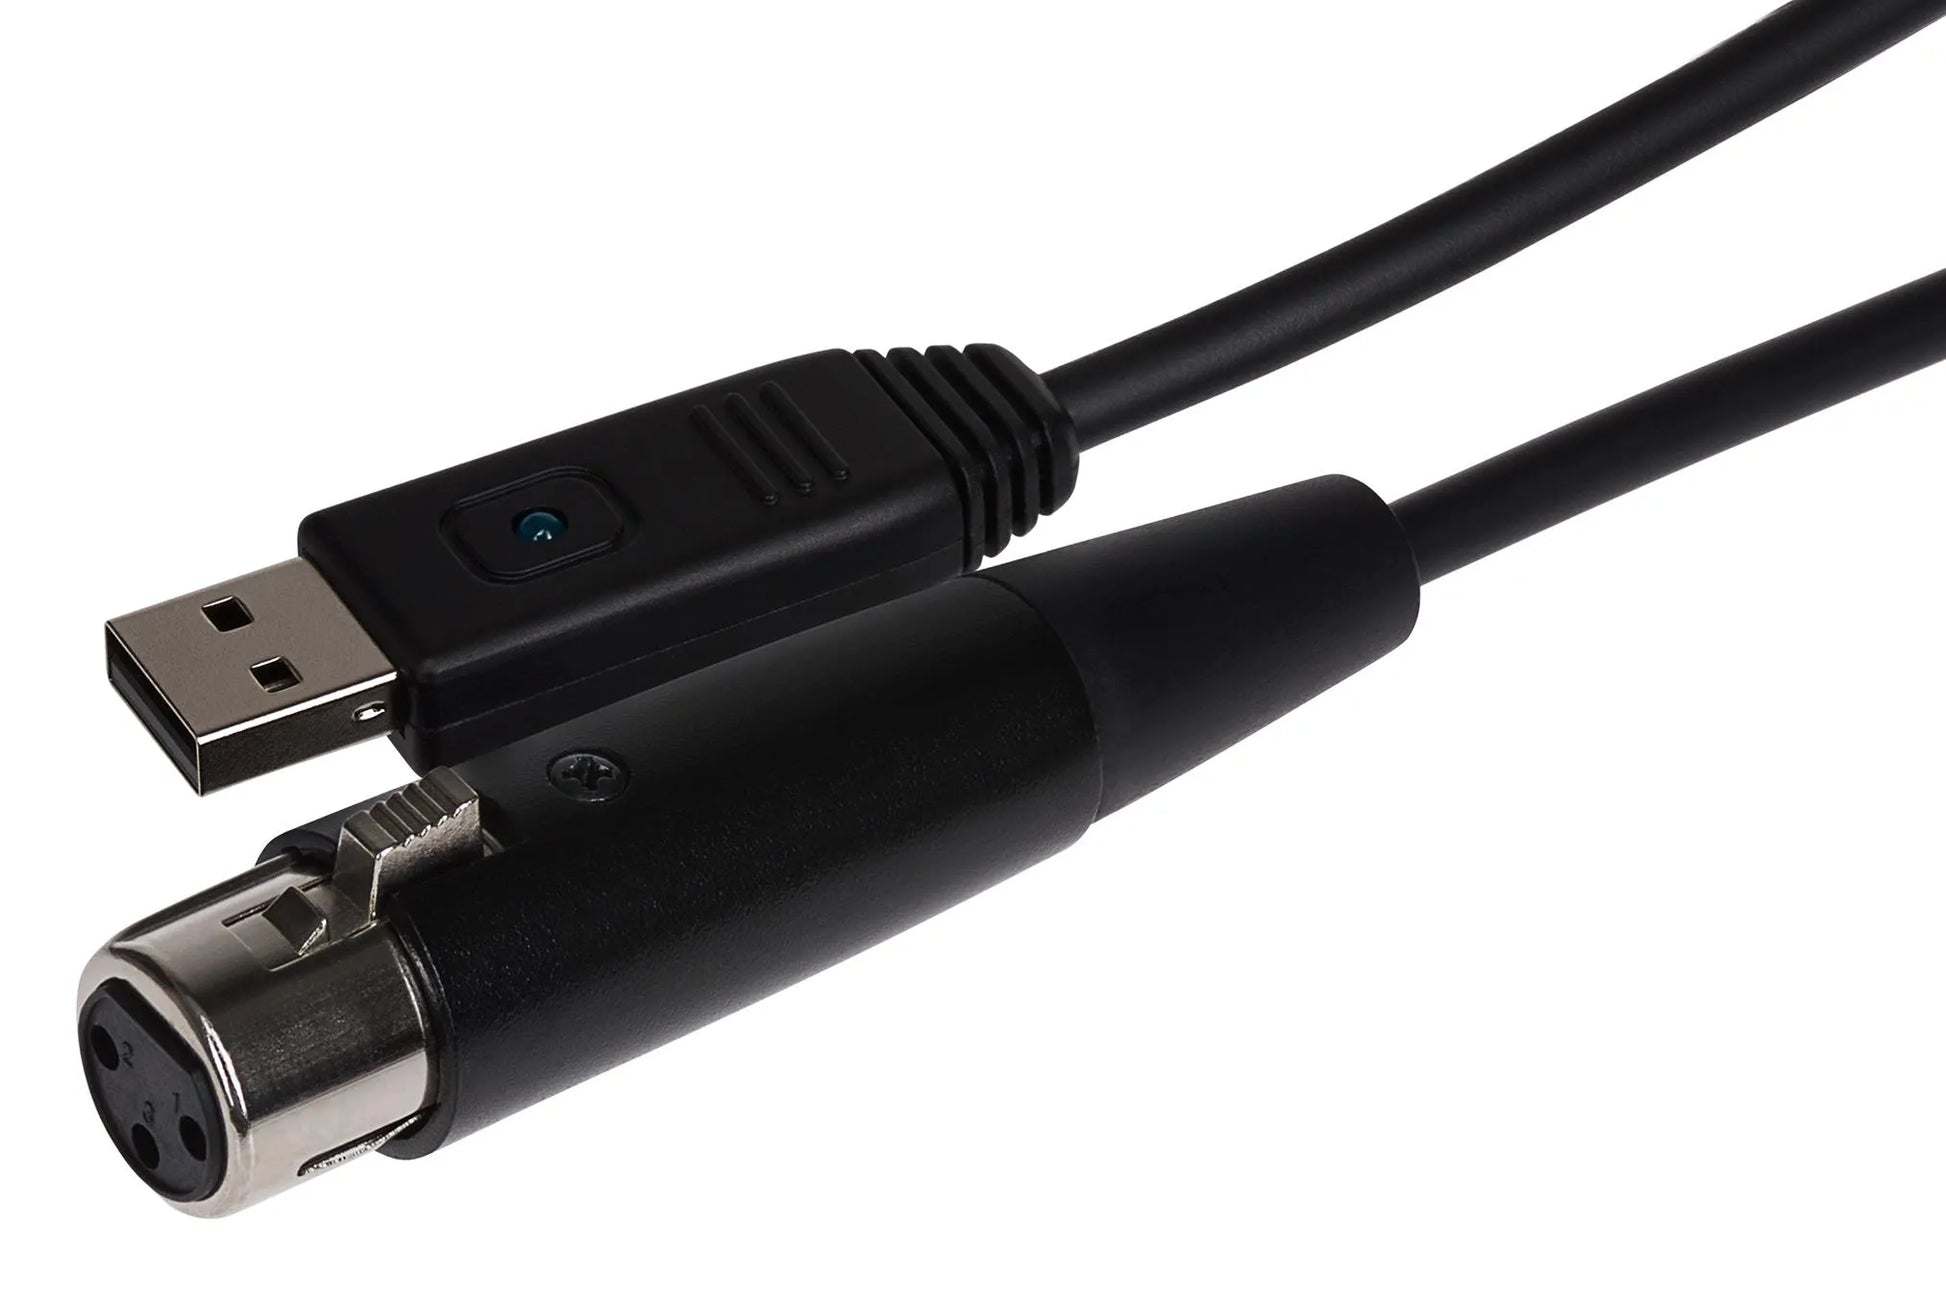 ProSound XLR to USB Microphone Cable - Black, 5m - ProSound